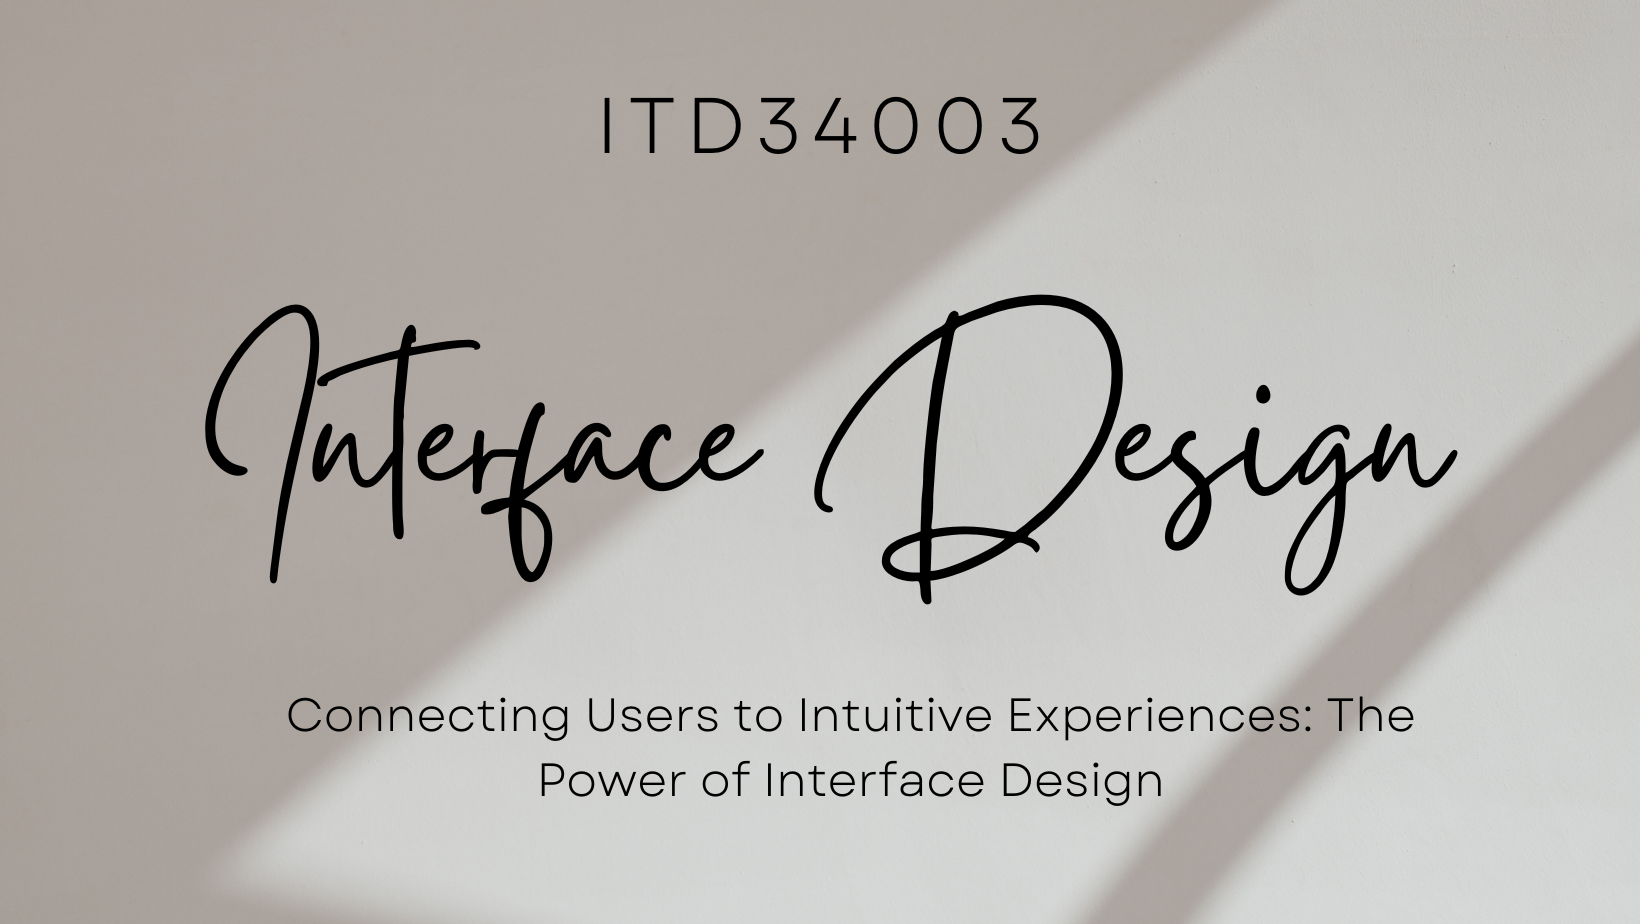 ITD34003 - INTERFACE DESIGN